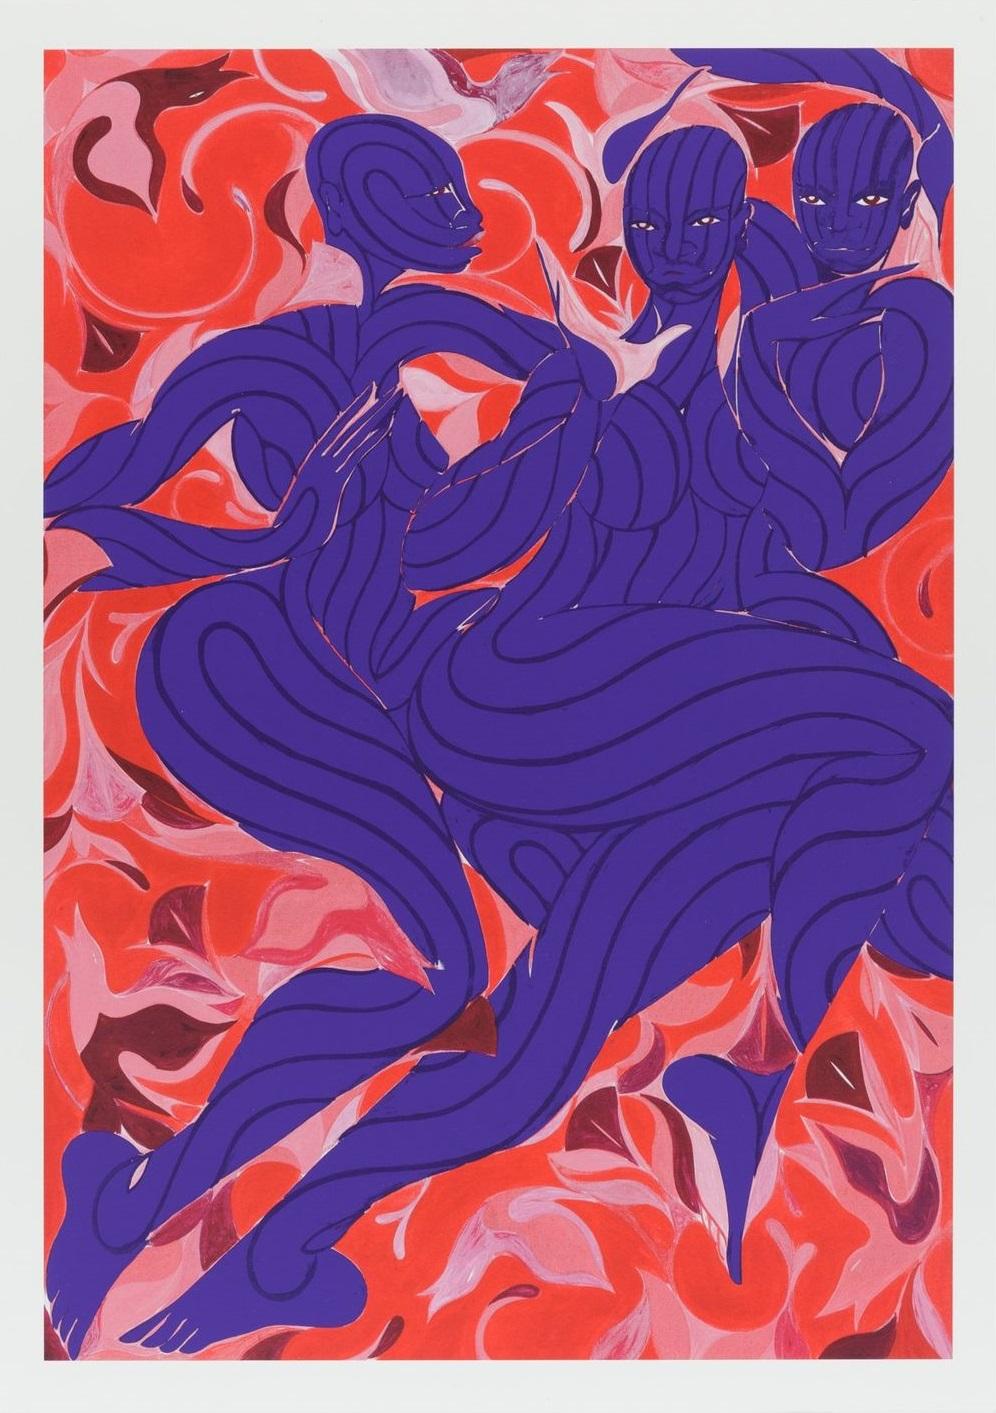 Tunji Adeniyi-Jones Figurative Print - Violet Dance